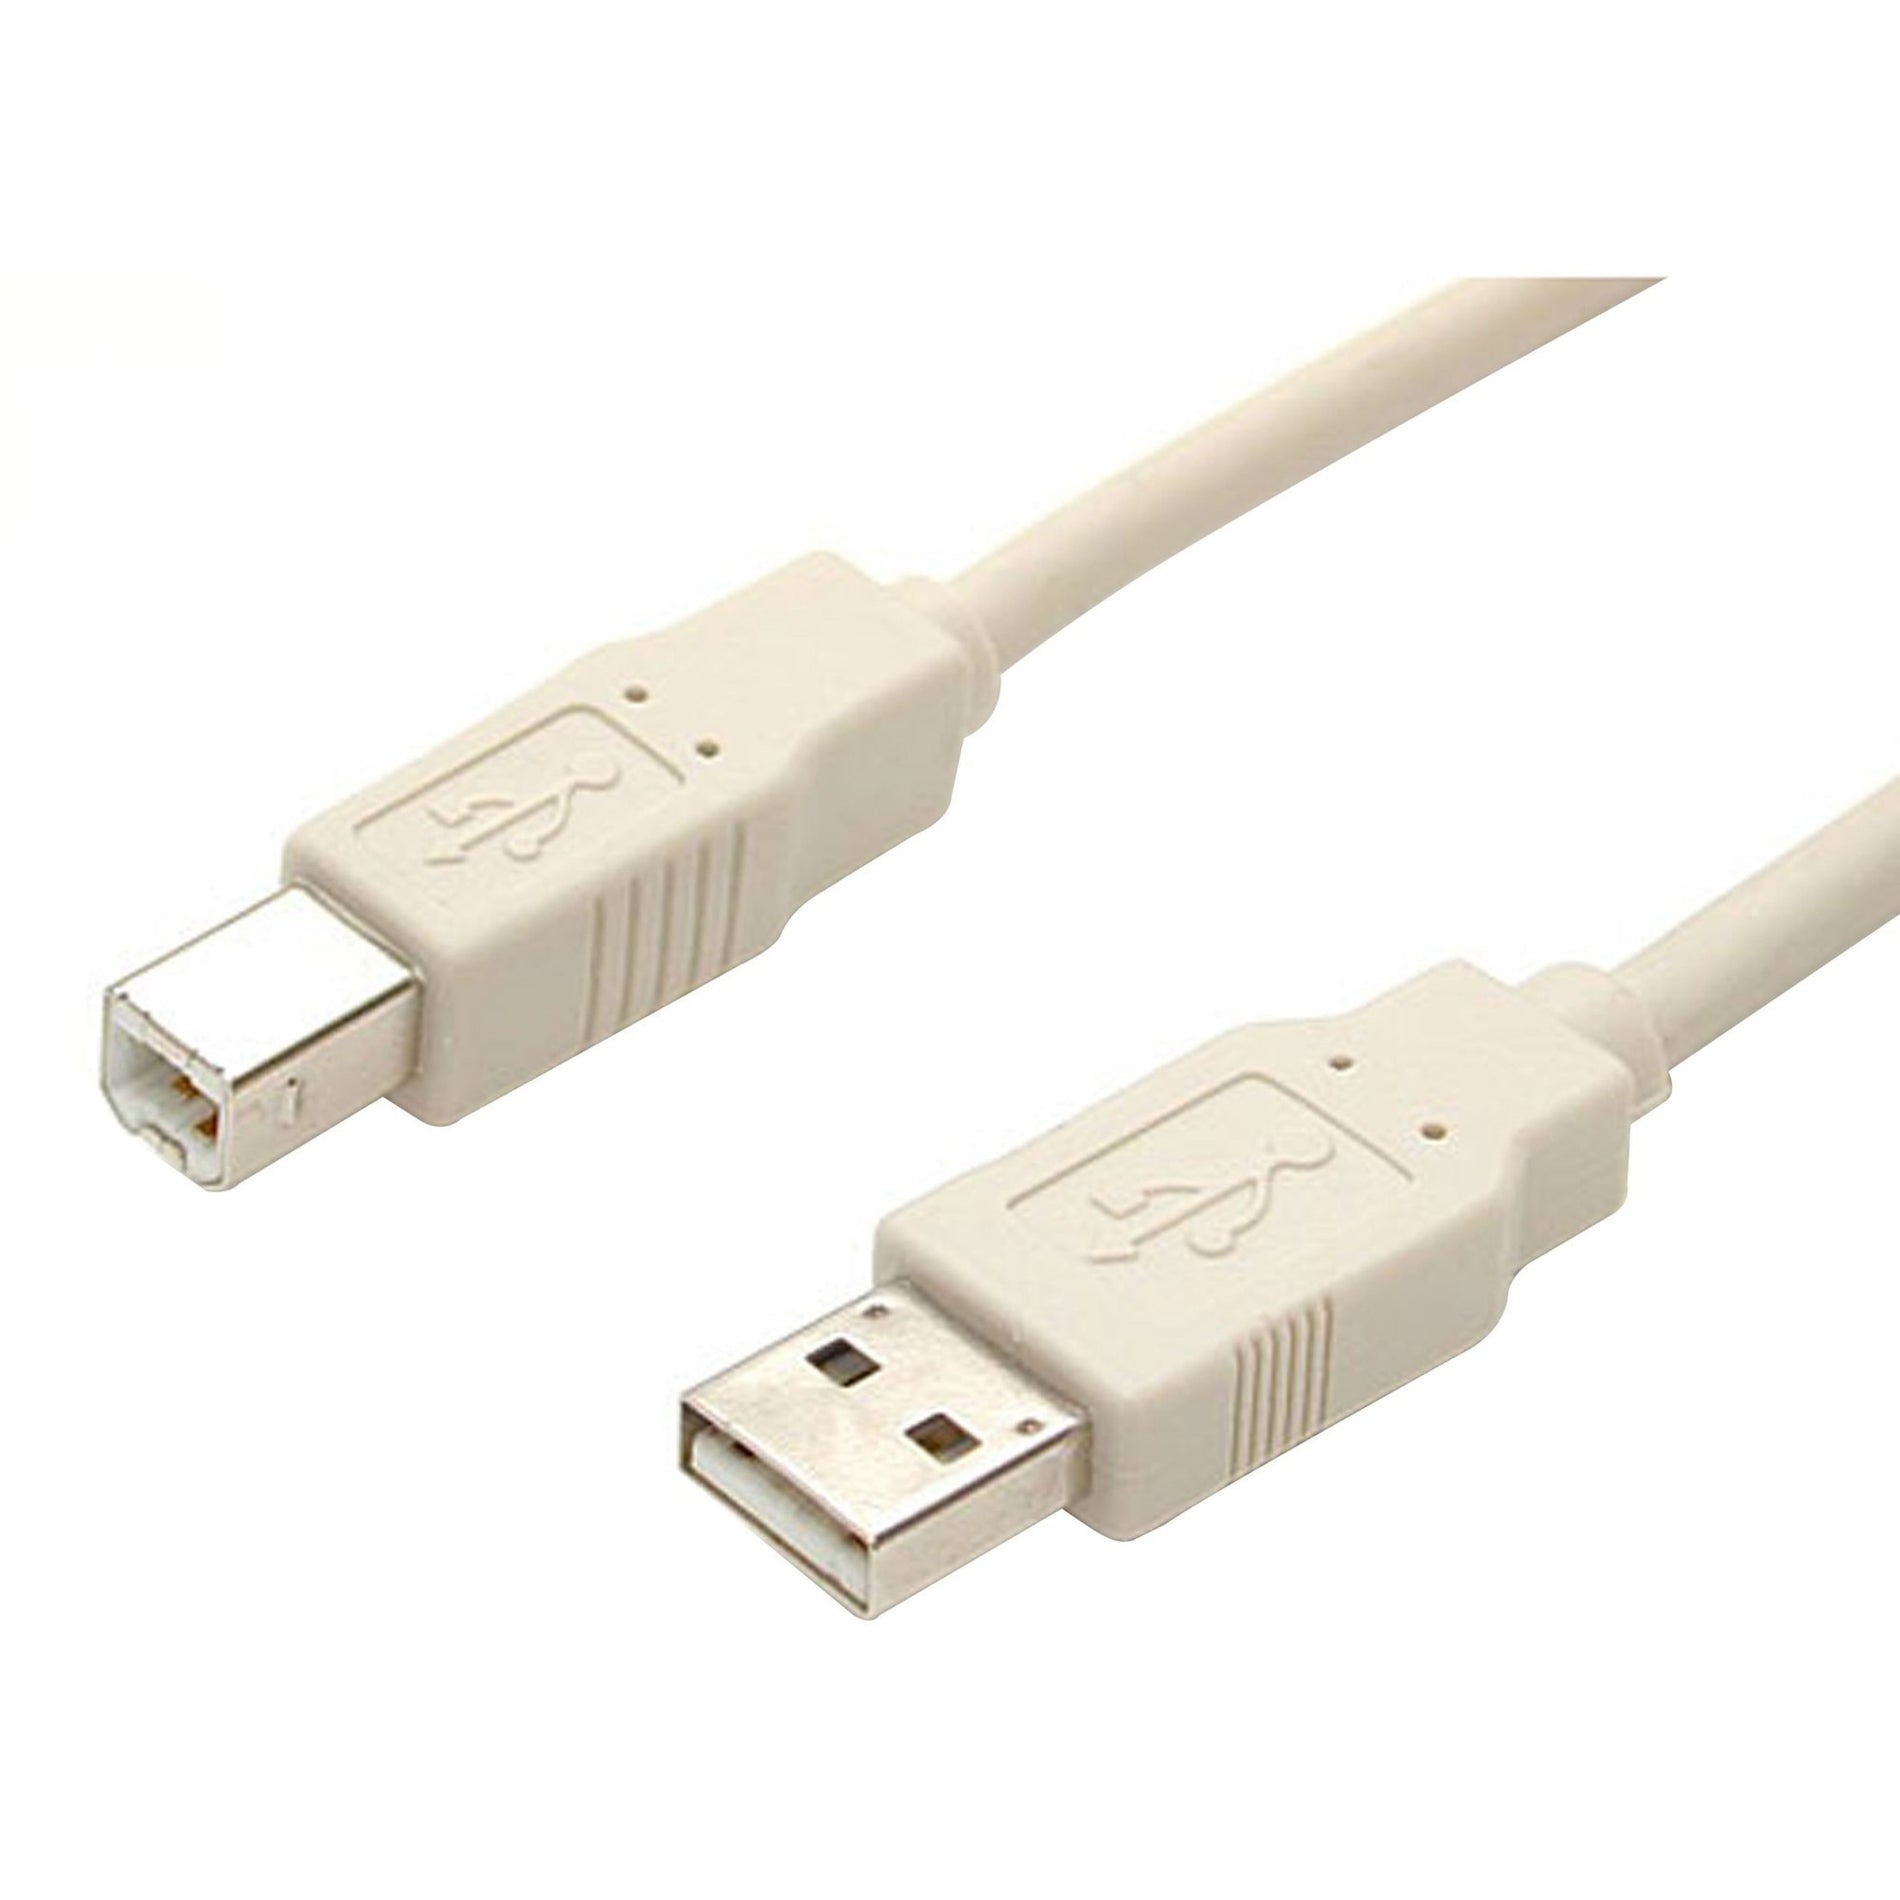 StarTech.com USBFAB_3 3 英尺 米色 A 到 B USB 2.0 电缆 - M/M，PC、打印机、扫描仪、硬盘数据传输电缆 星美科技